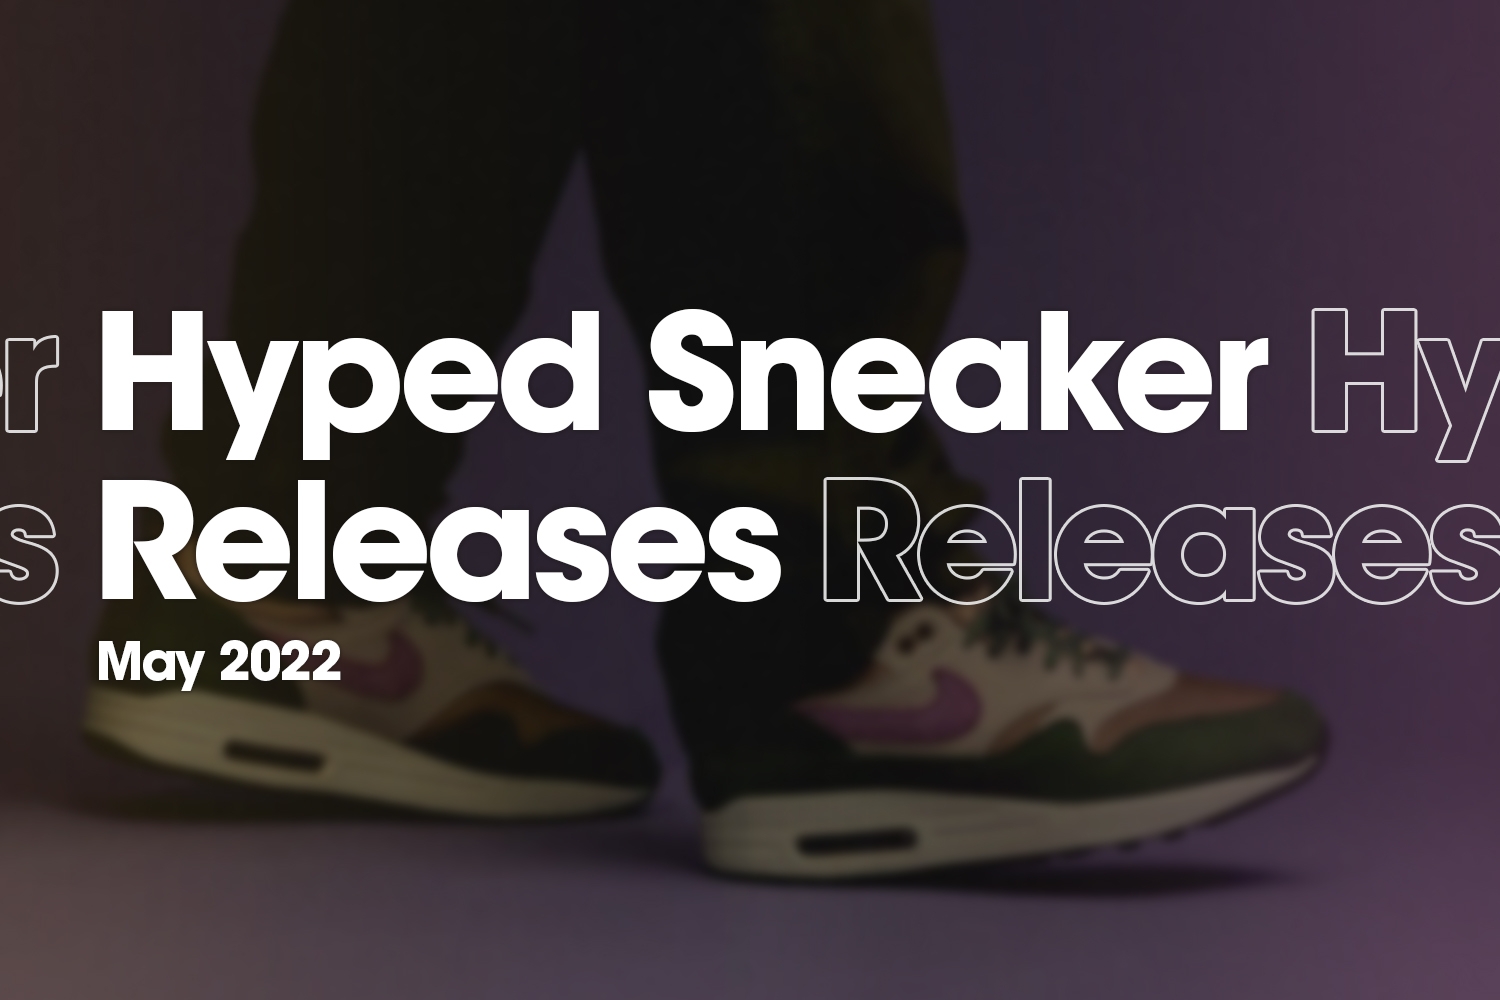 Hyped Sneaker Releases van mei 2022